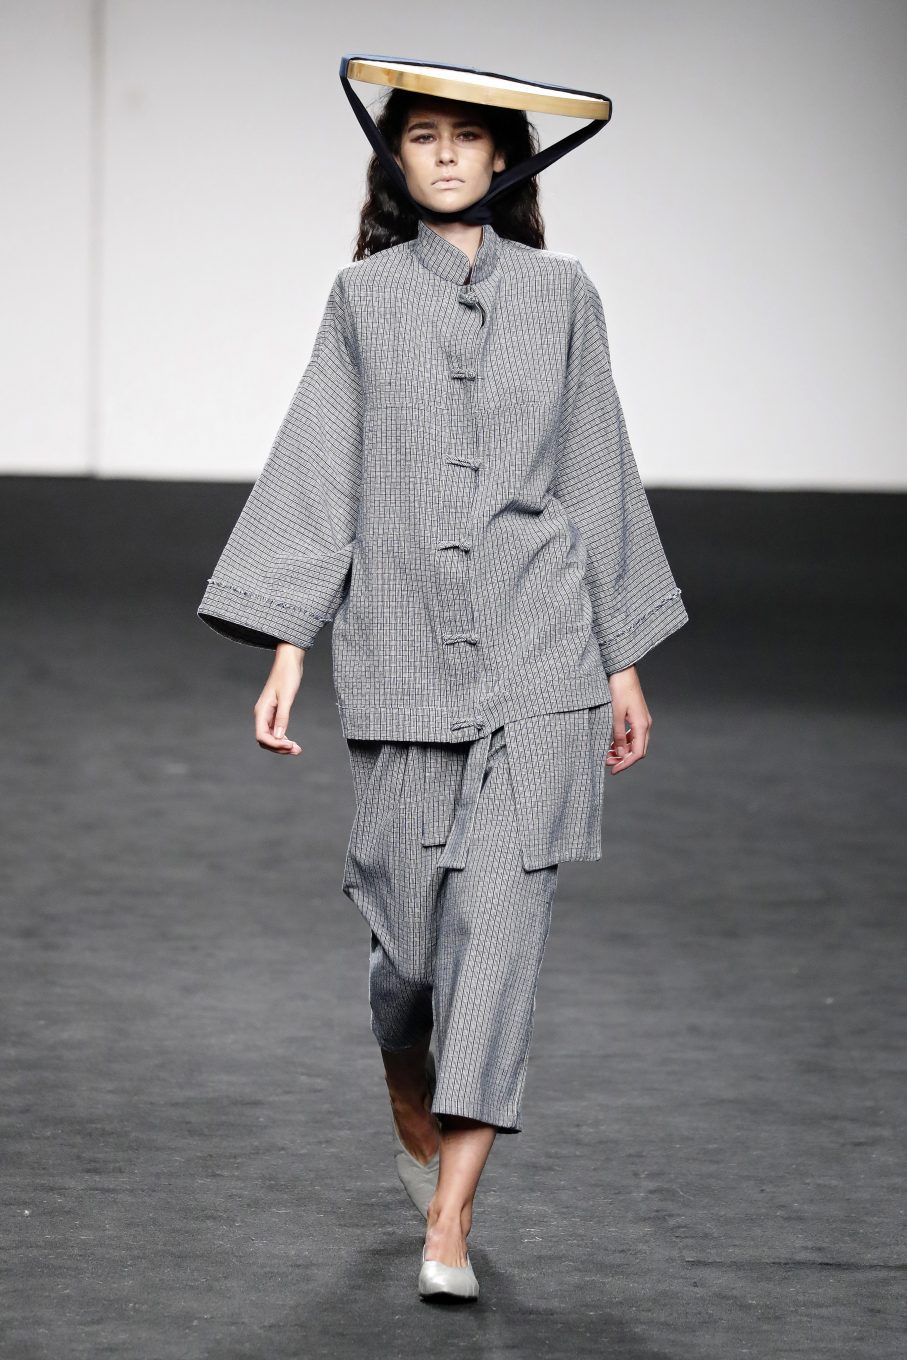 Modelo con traje de chaqueta gris de Deyi